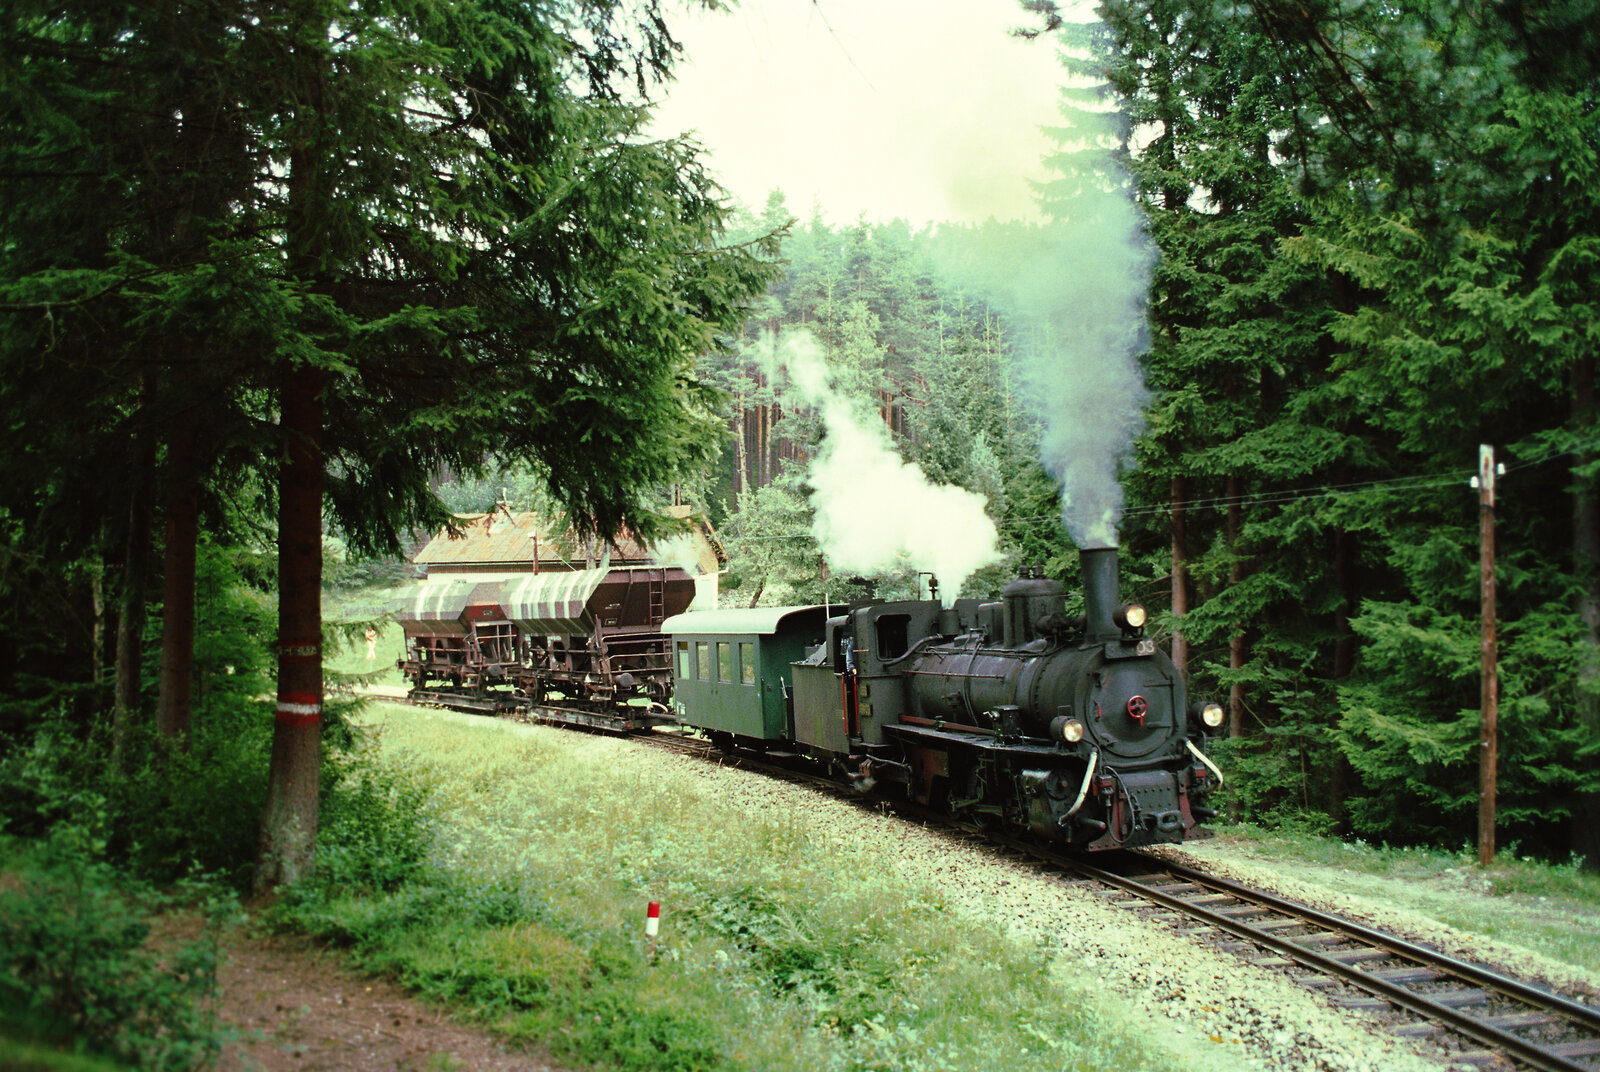 Regulärer Zug der Waldviertelbahn mit ÖBB-Dampflok 399.03.
Datum: 20.08.1984 